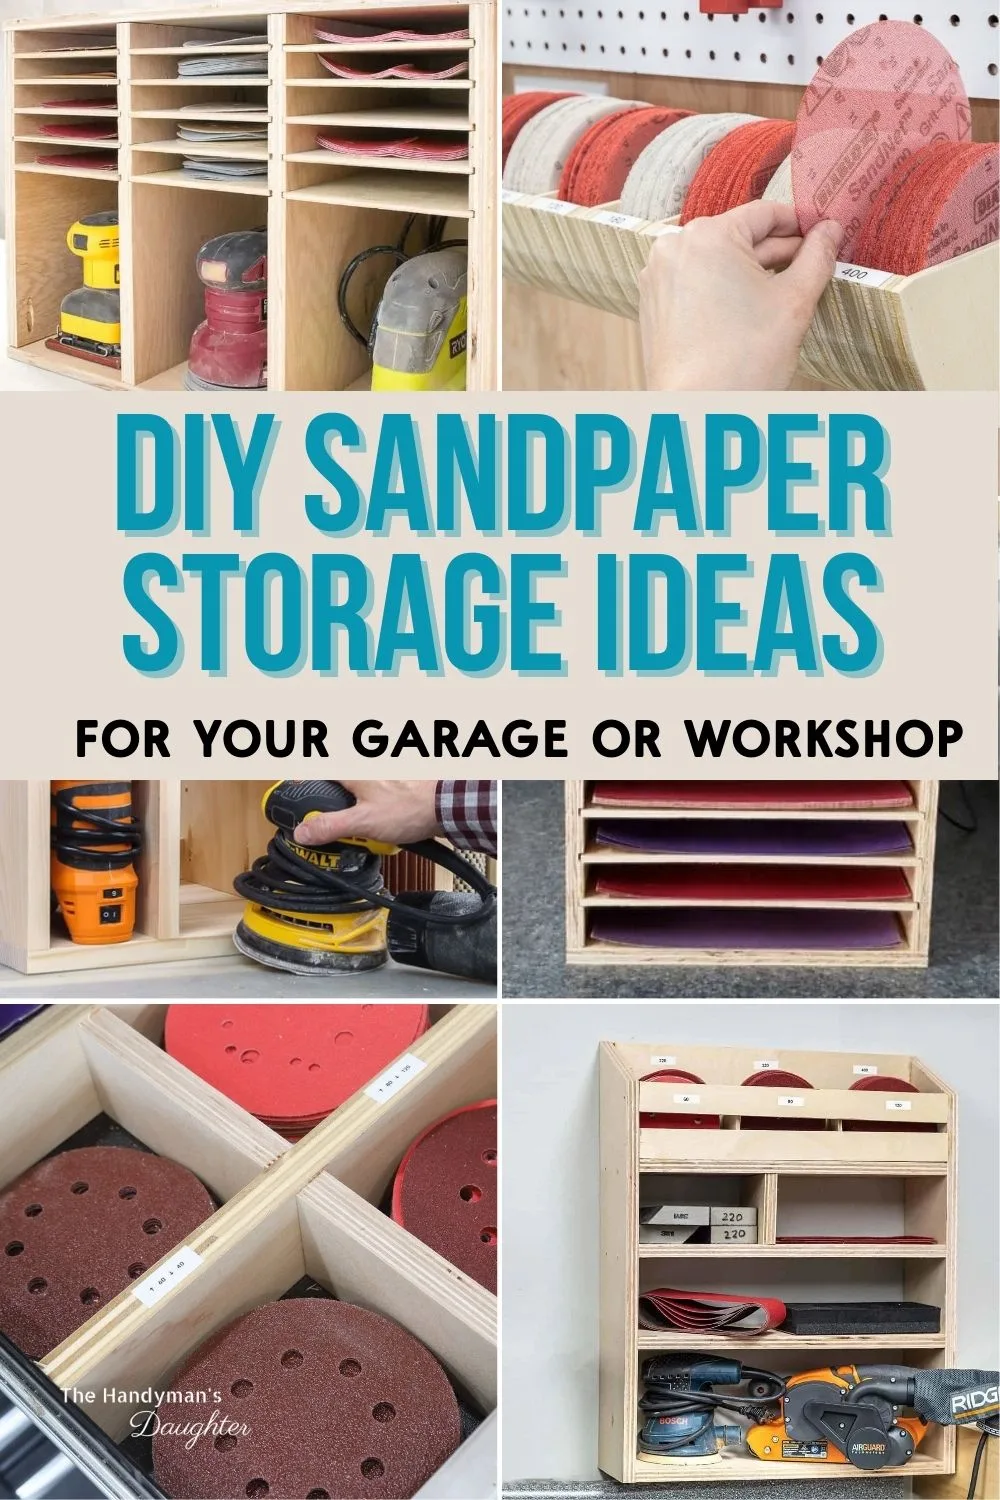 10 Smart Sandpaper Storage Ideas to Buy or DIY - The Handyman's Daughter